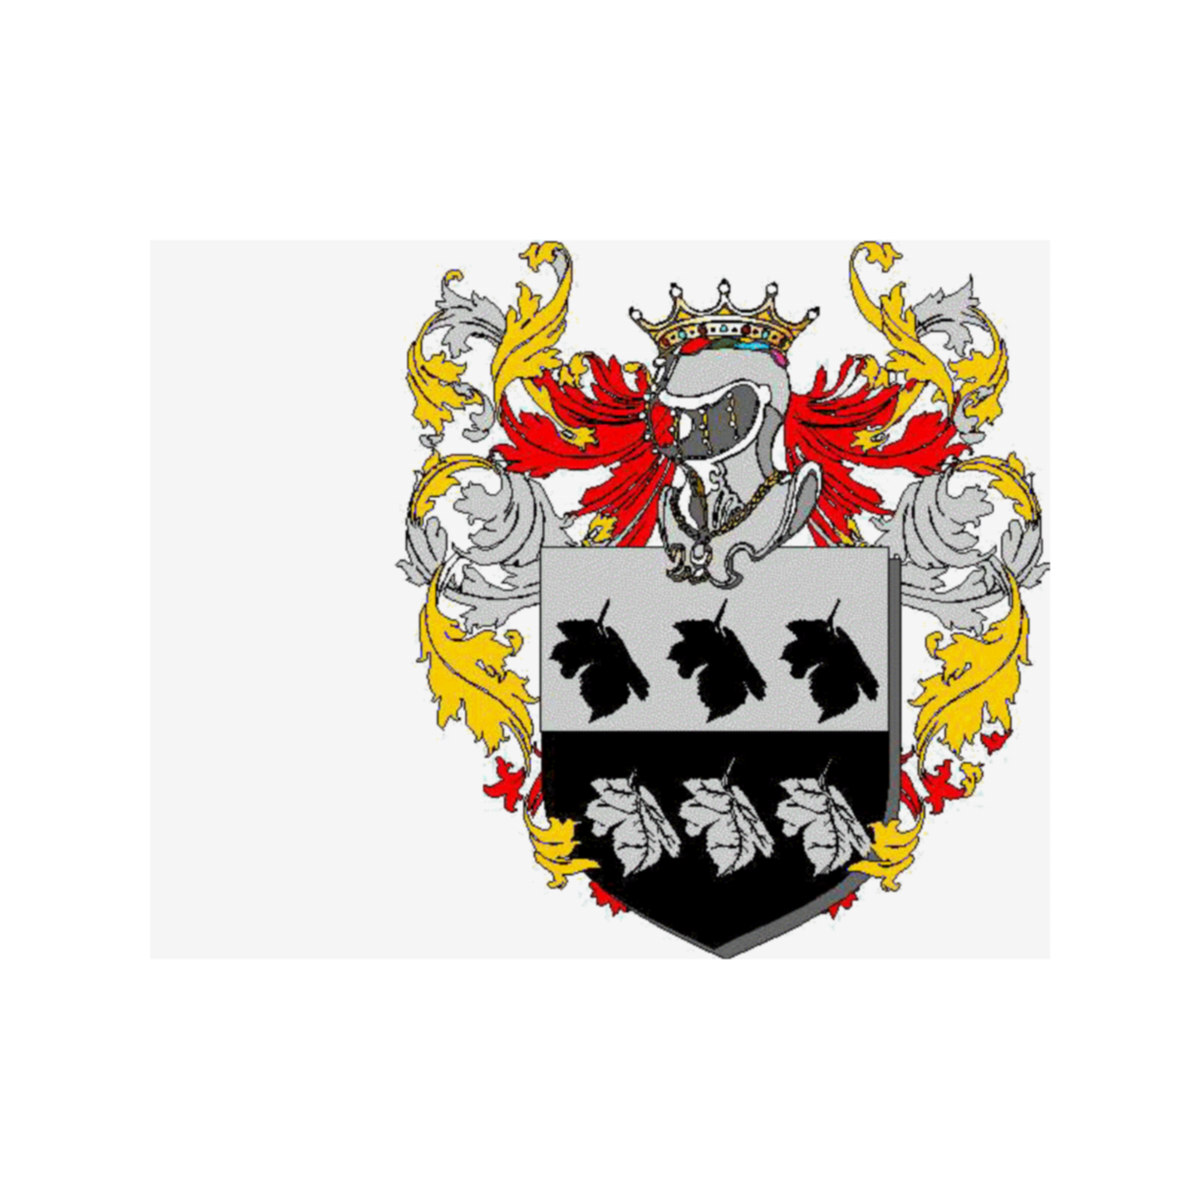 Wappen der Familie, Aschero,Aschieri,Aschiero,Scieri